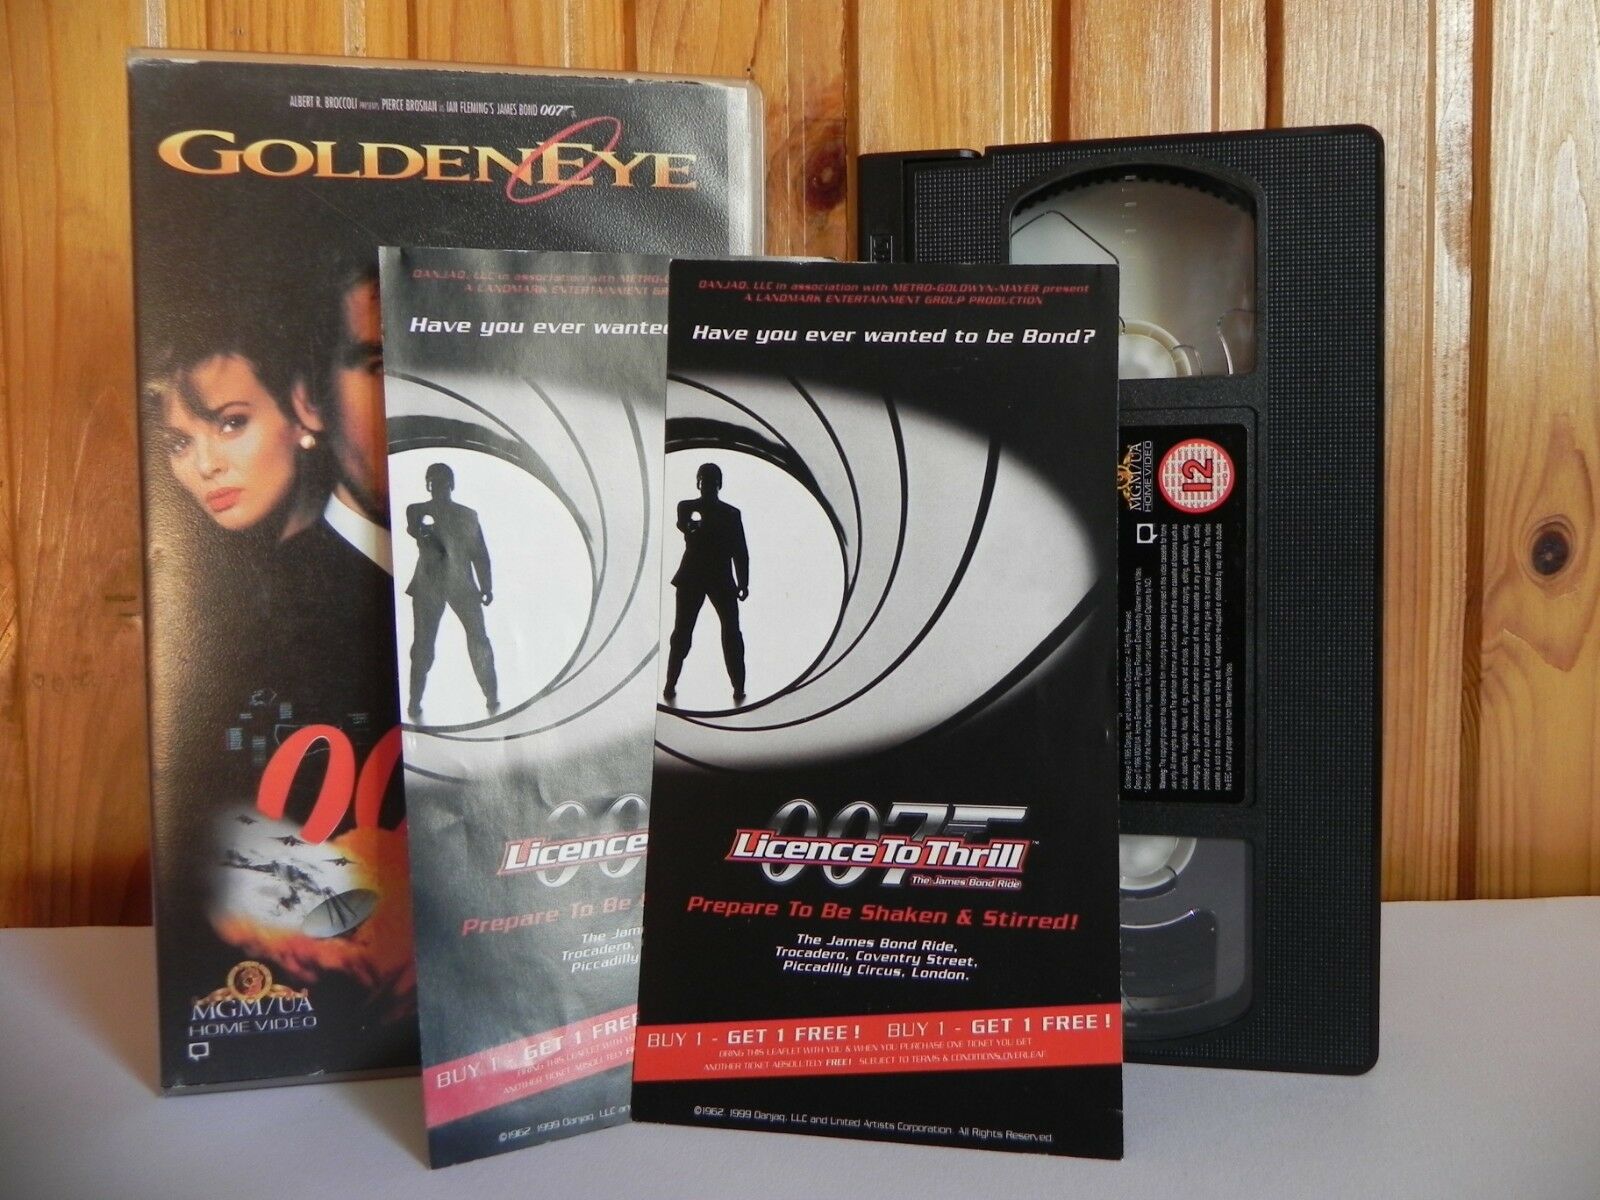 Goldeneye (1996); [007 James Bond] - Spy Action - Pierce Brosnan - Pal VHS-